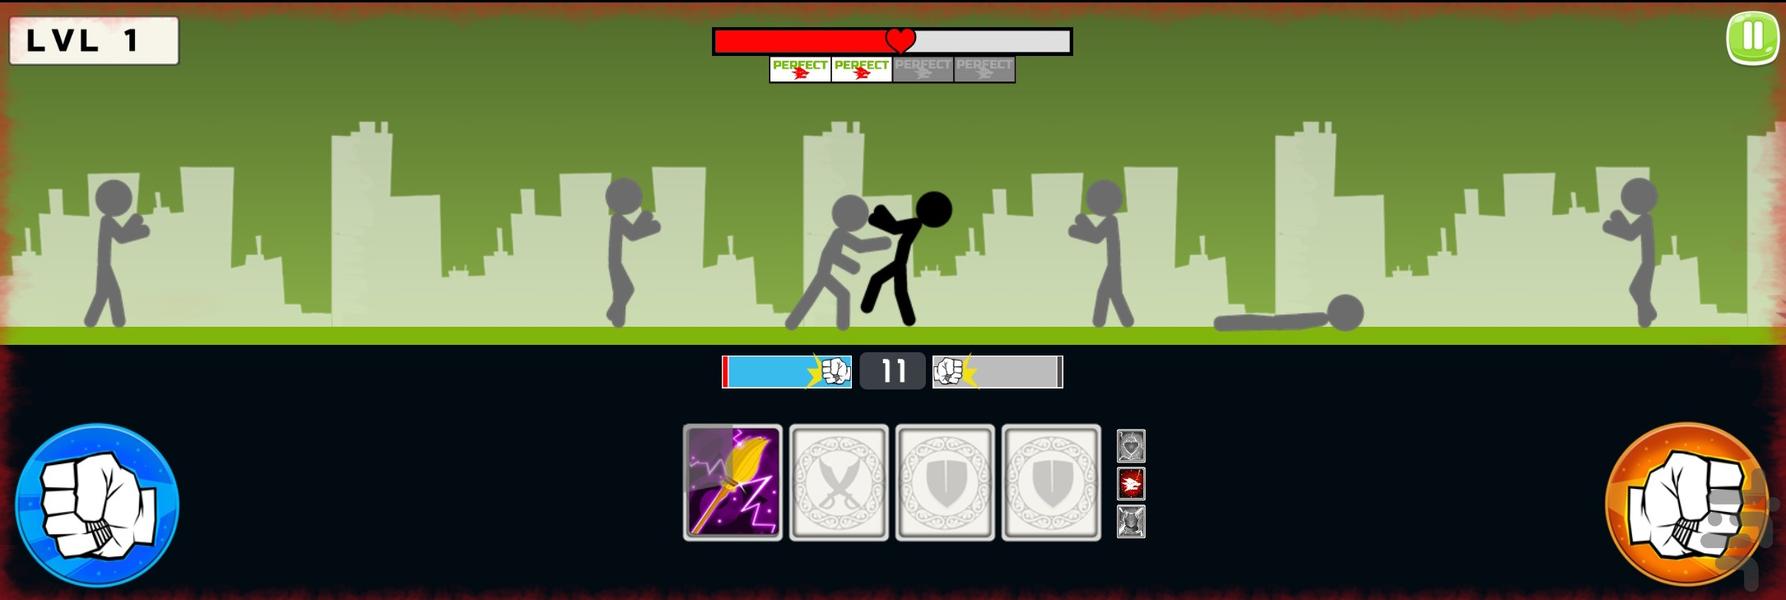 بازی جنگ استیکر ها - Gameplay image of android game